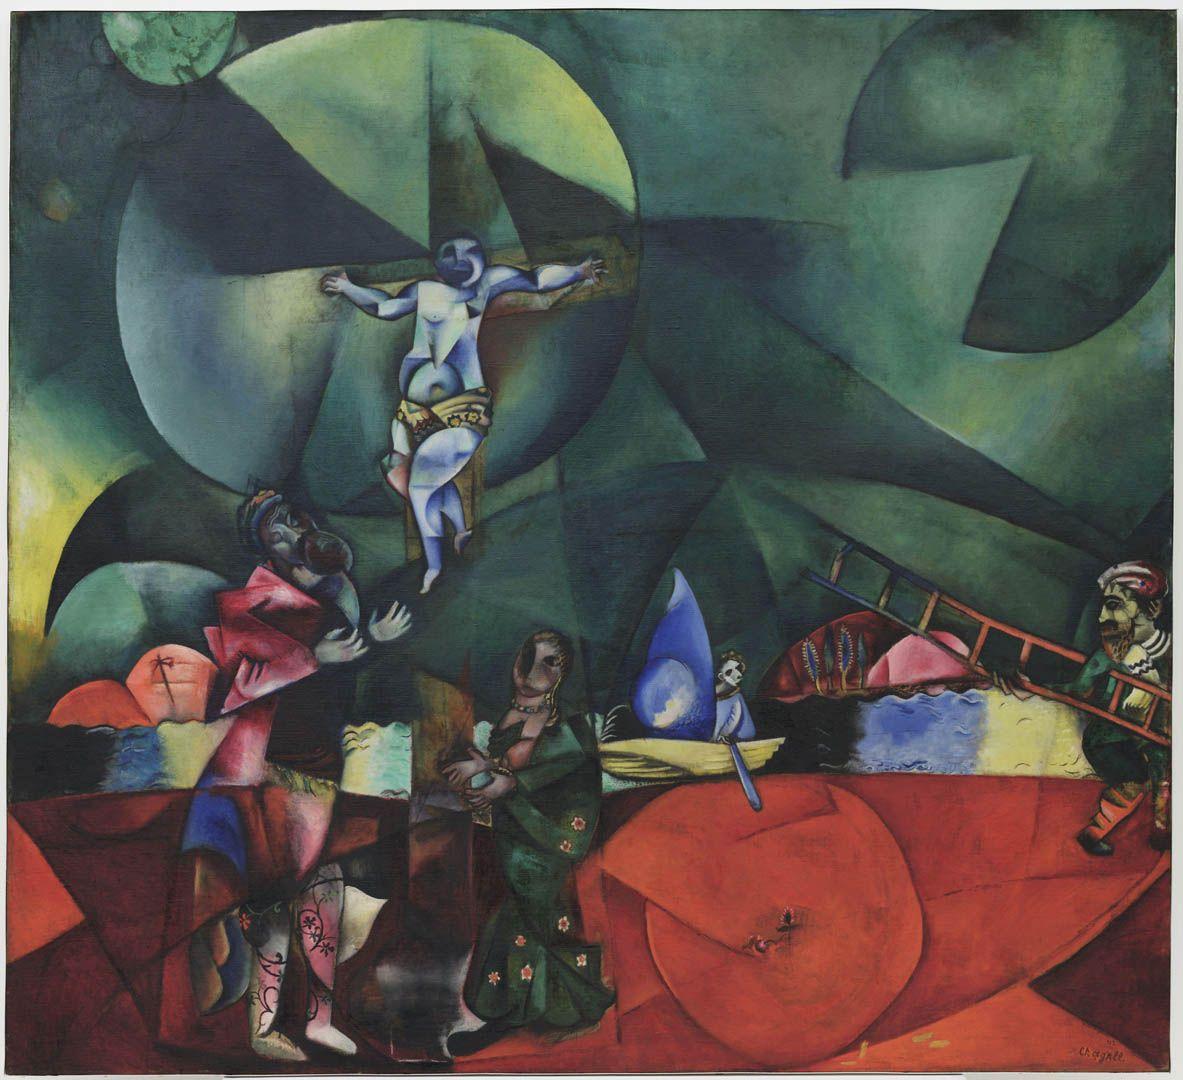 عکس نقاشی اثر مارک شاگال در سبک اکسپرسیونیسم 